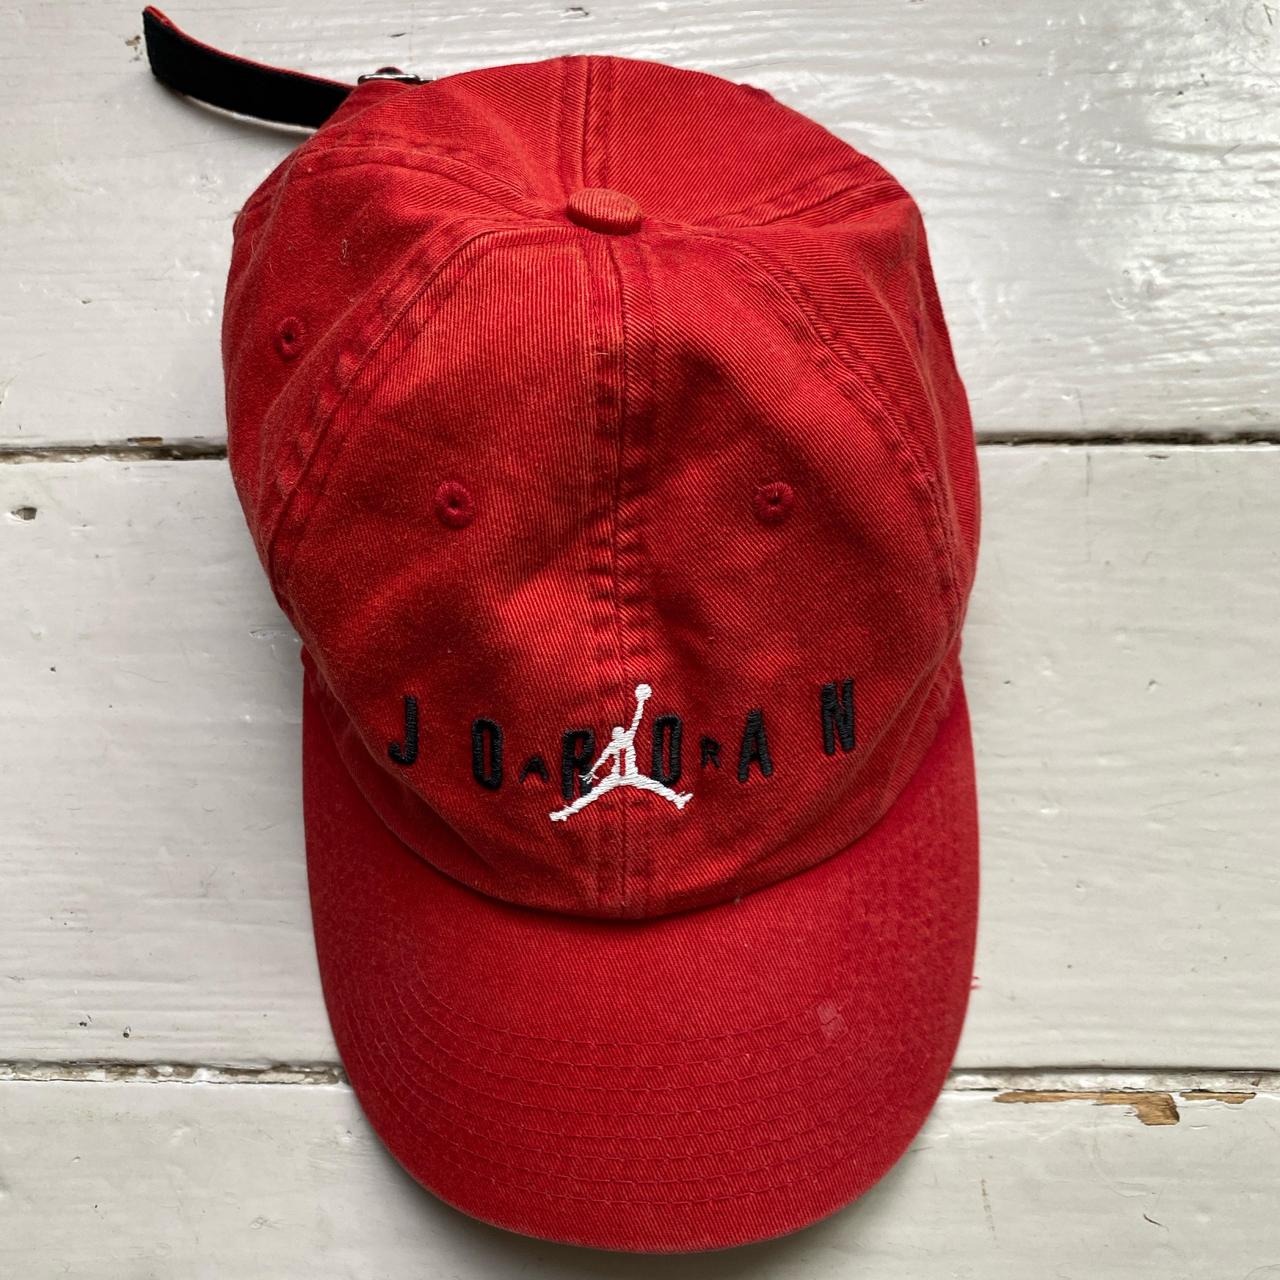 Jordan Vintage Red Black and White Baseball Cap